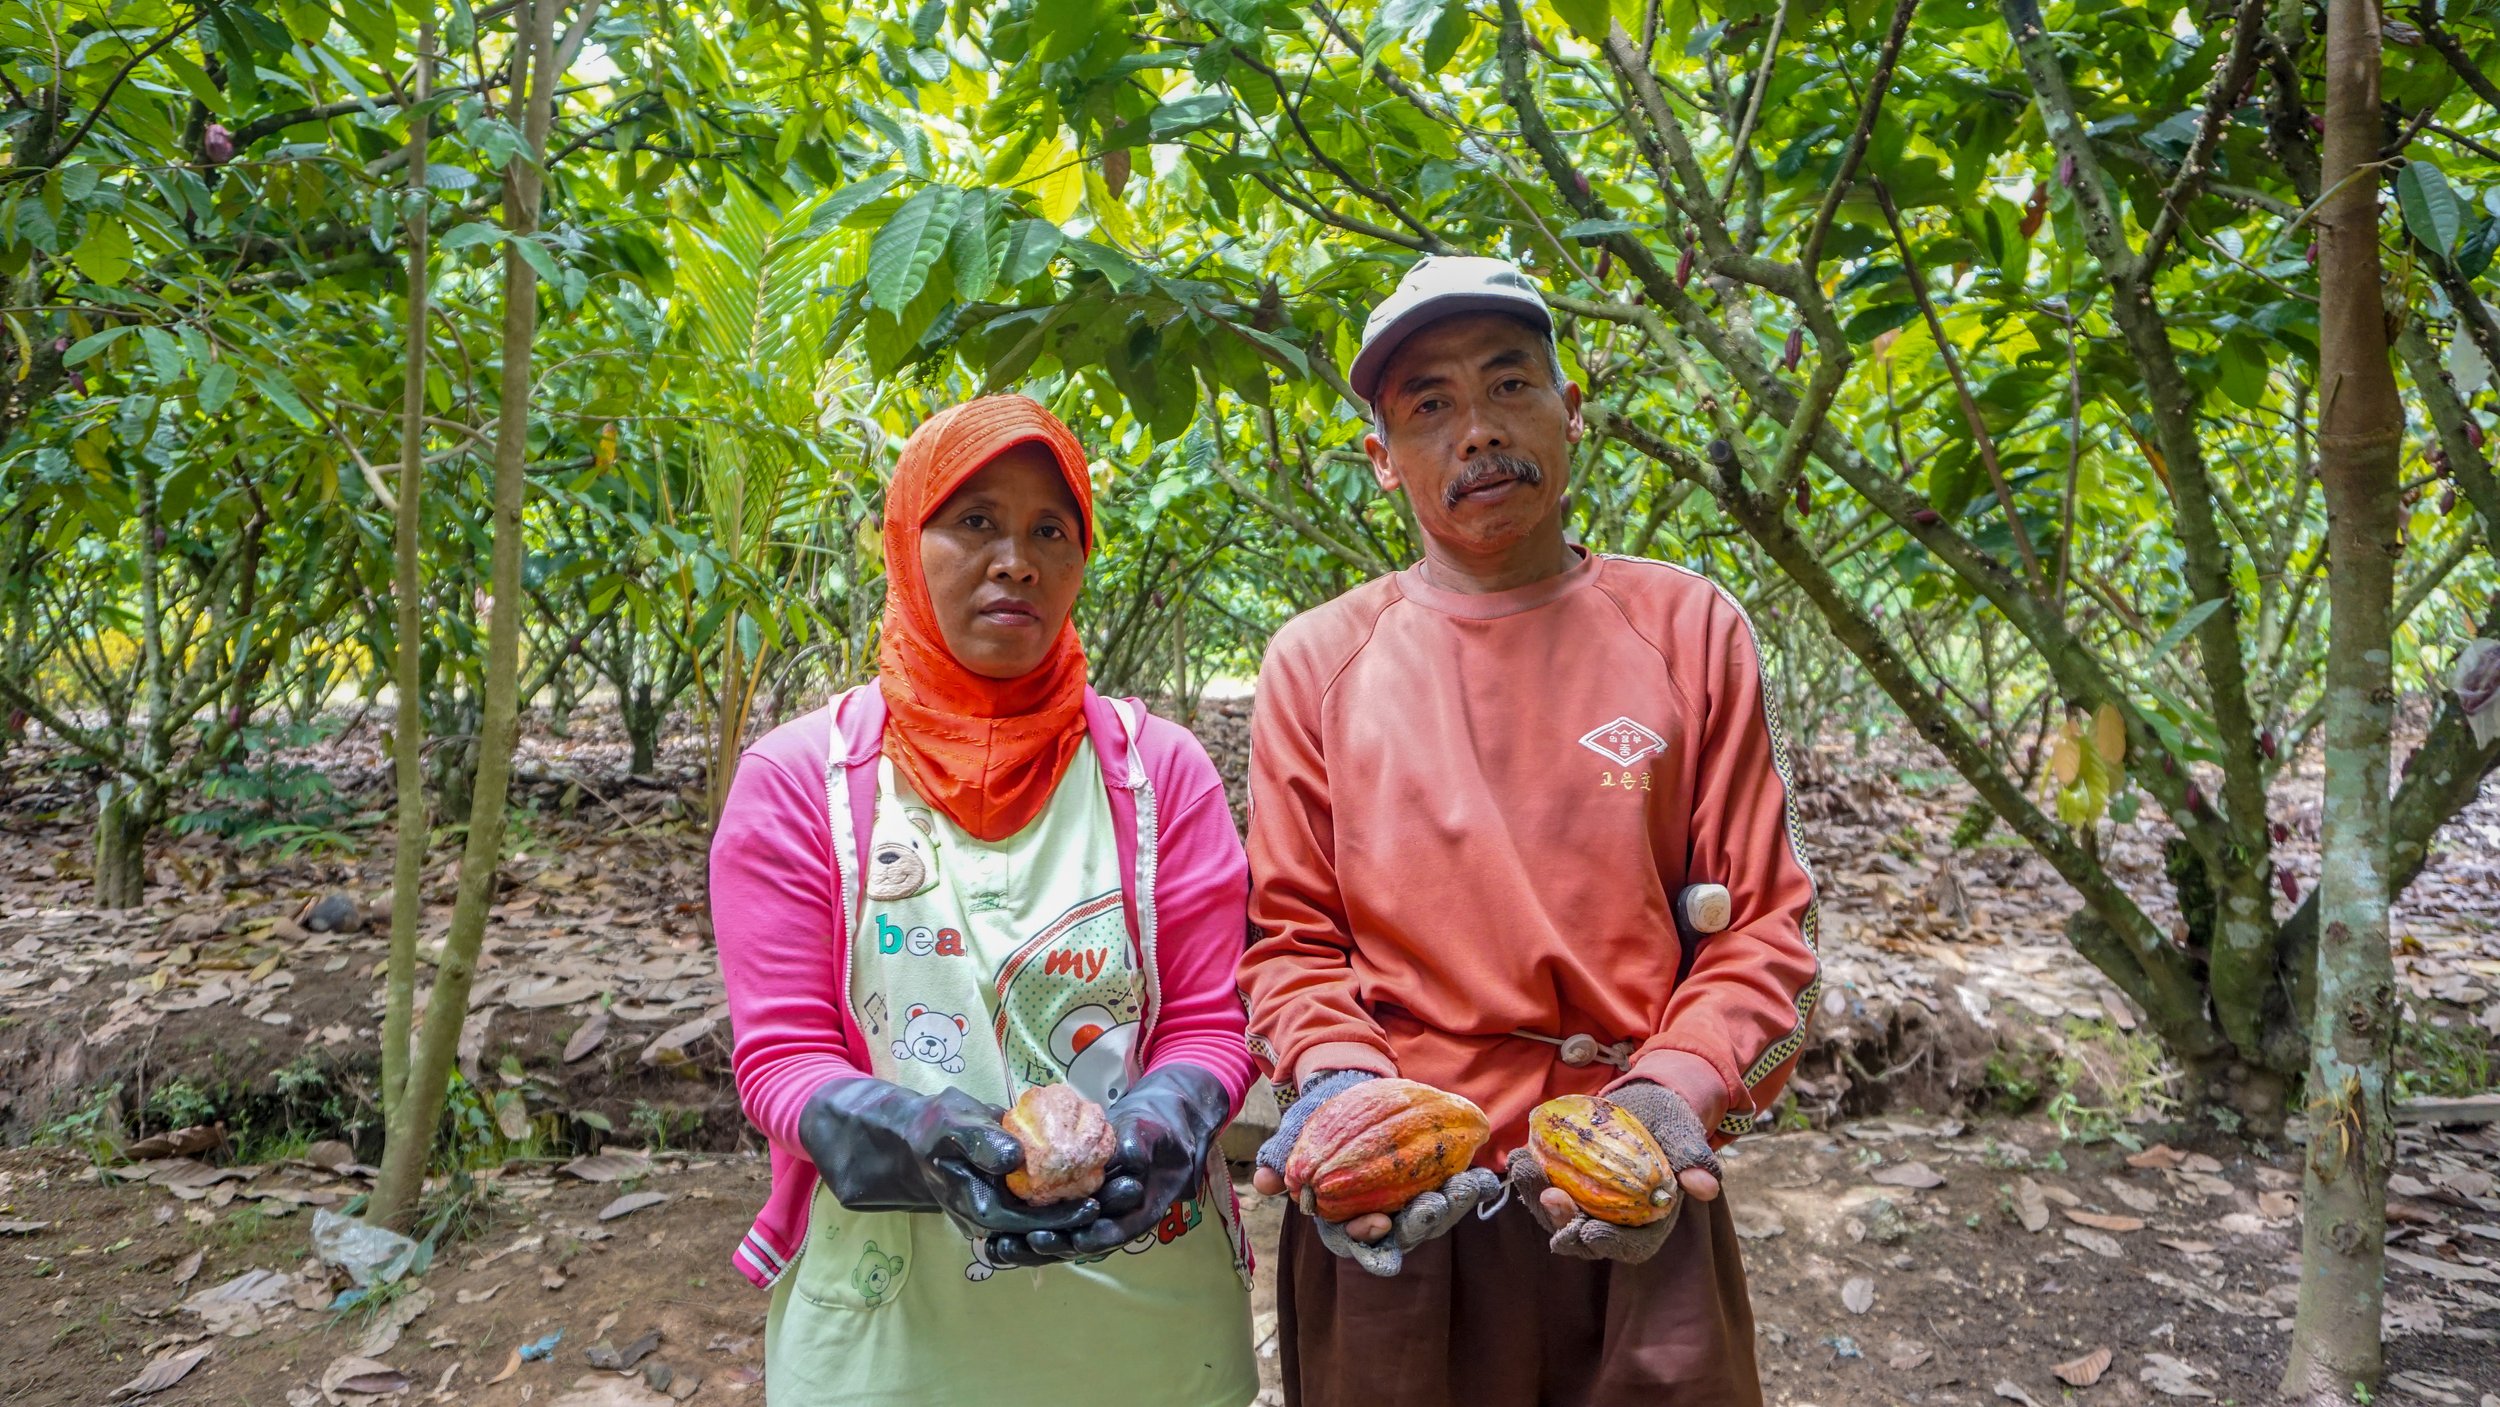 Pak Tekad and his wife harvest cocoa pods in Taluditi_Burung Indonesia_Muhammad Meisa.jpg